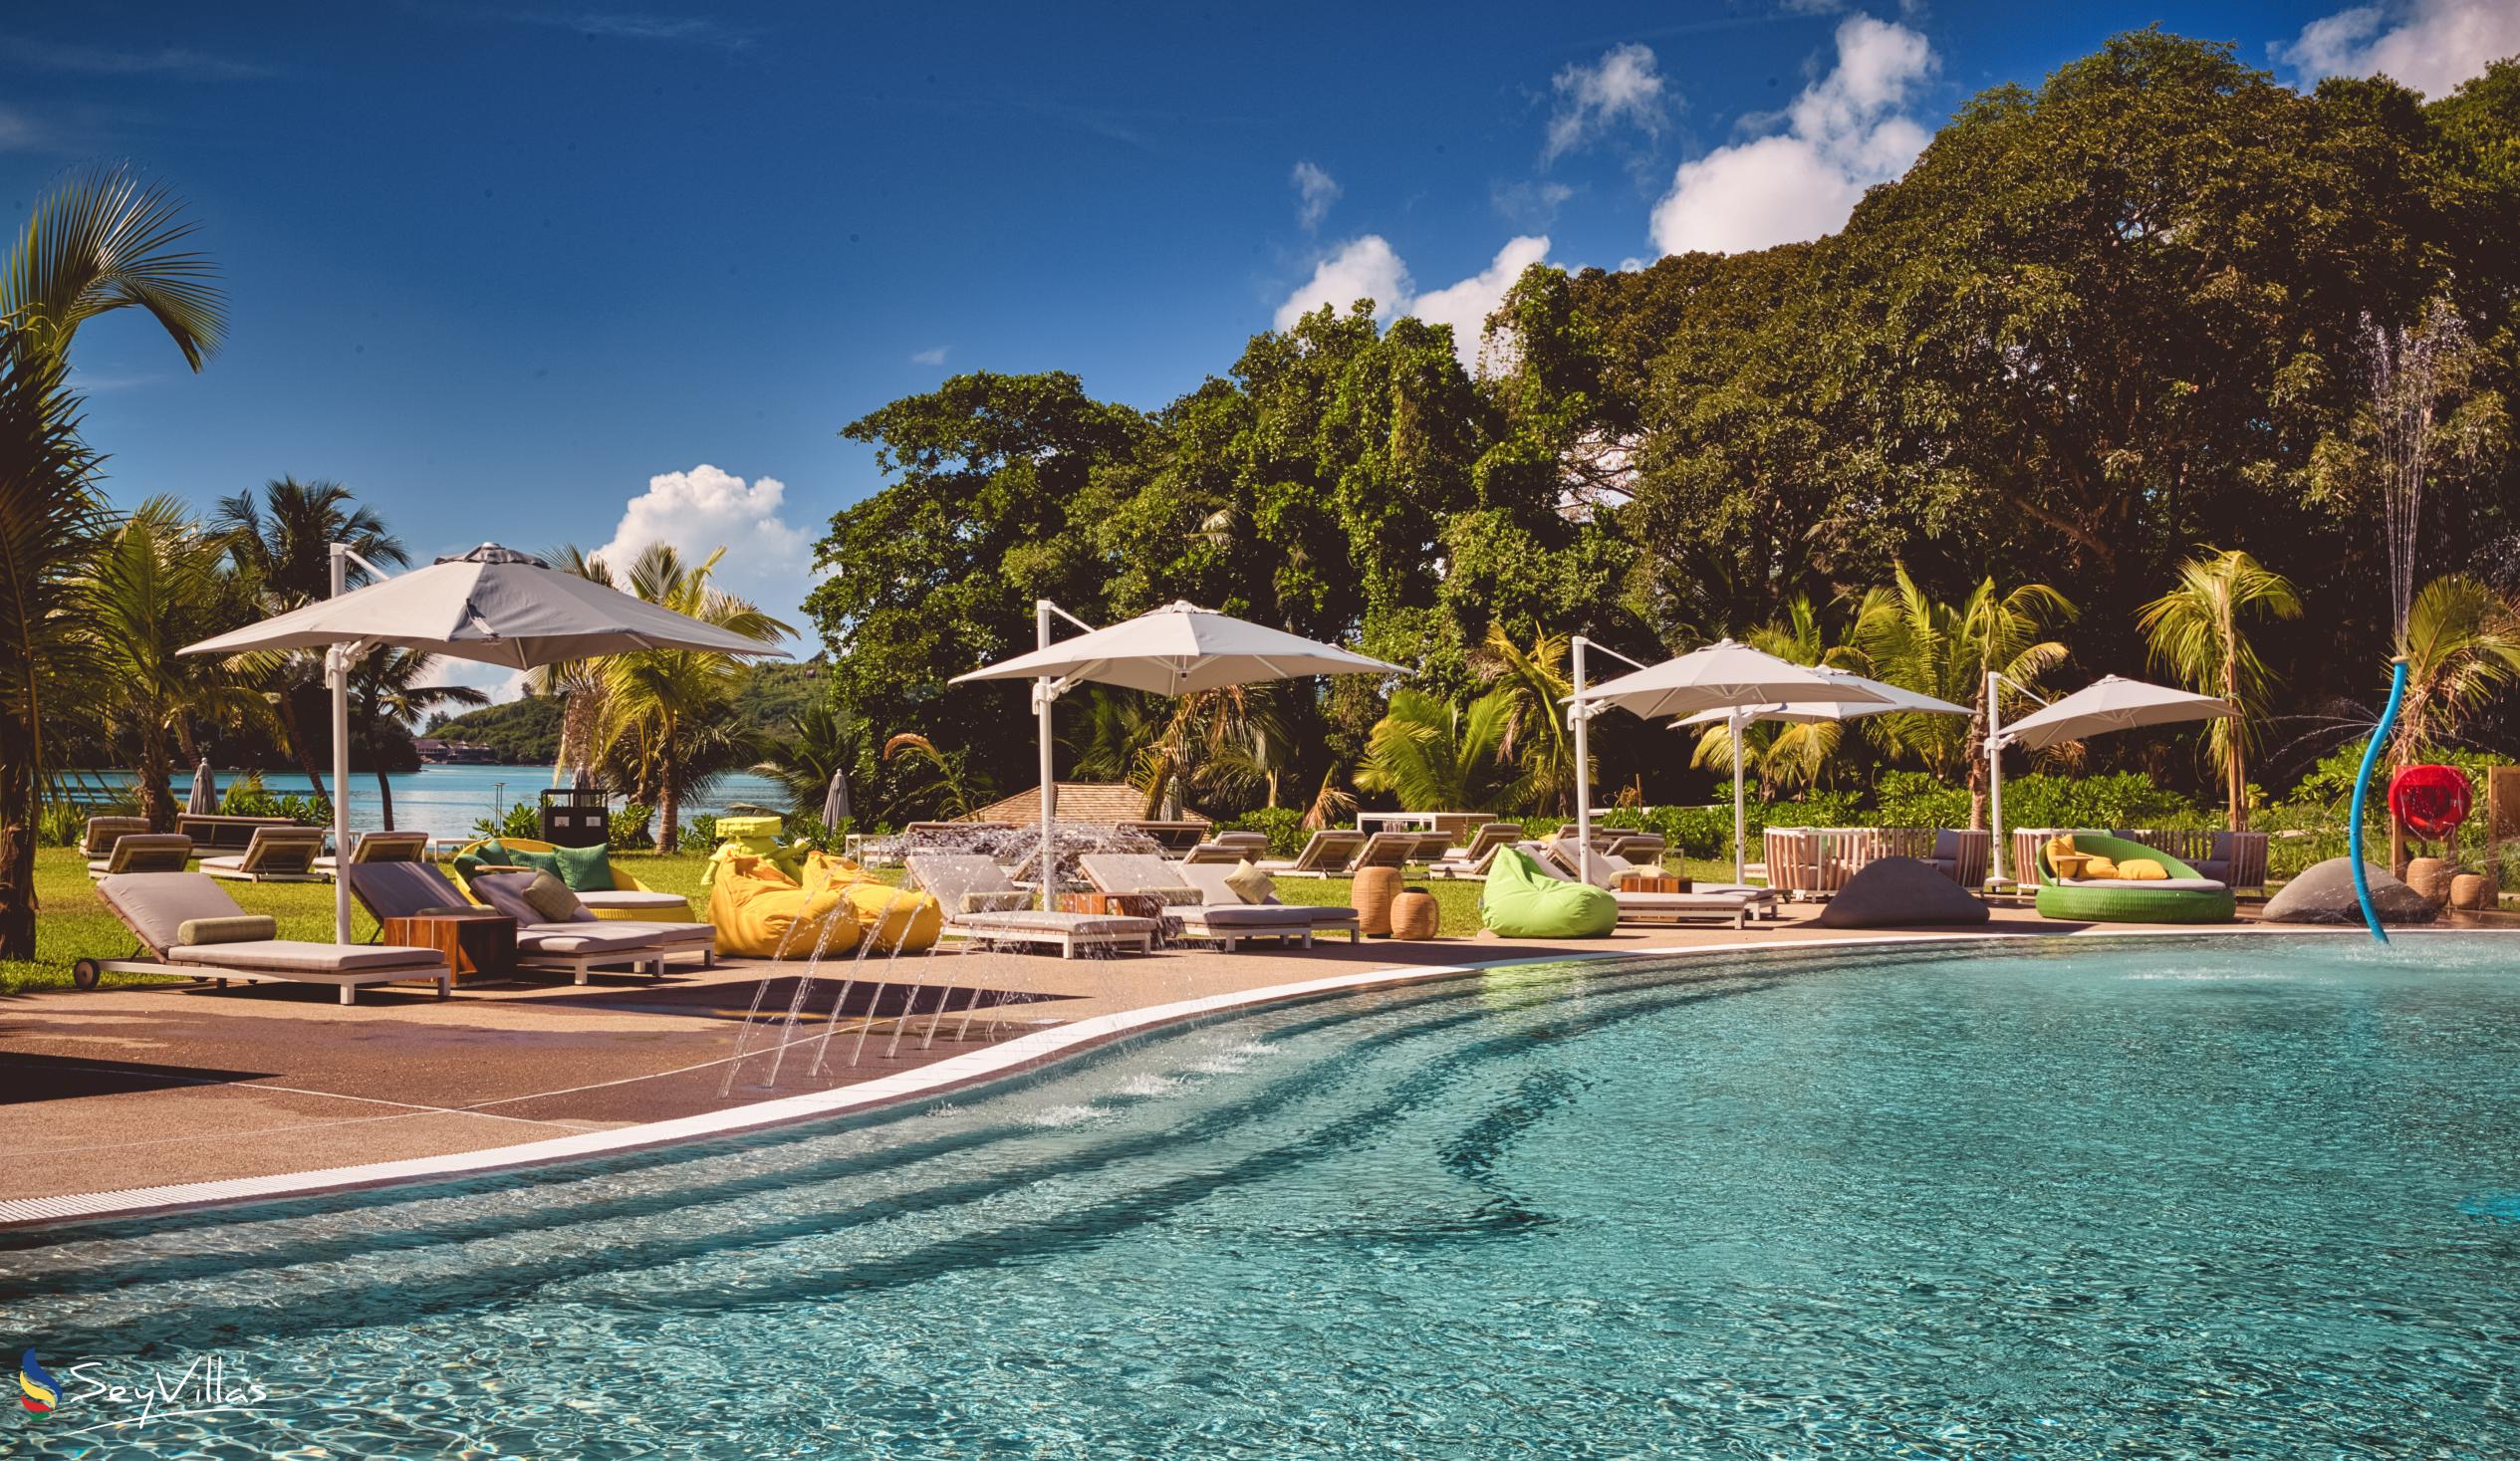 Photo 9: Club Med Seychelles - Outdoor area - Saint Anne (Seychelles)